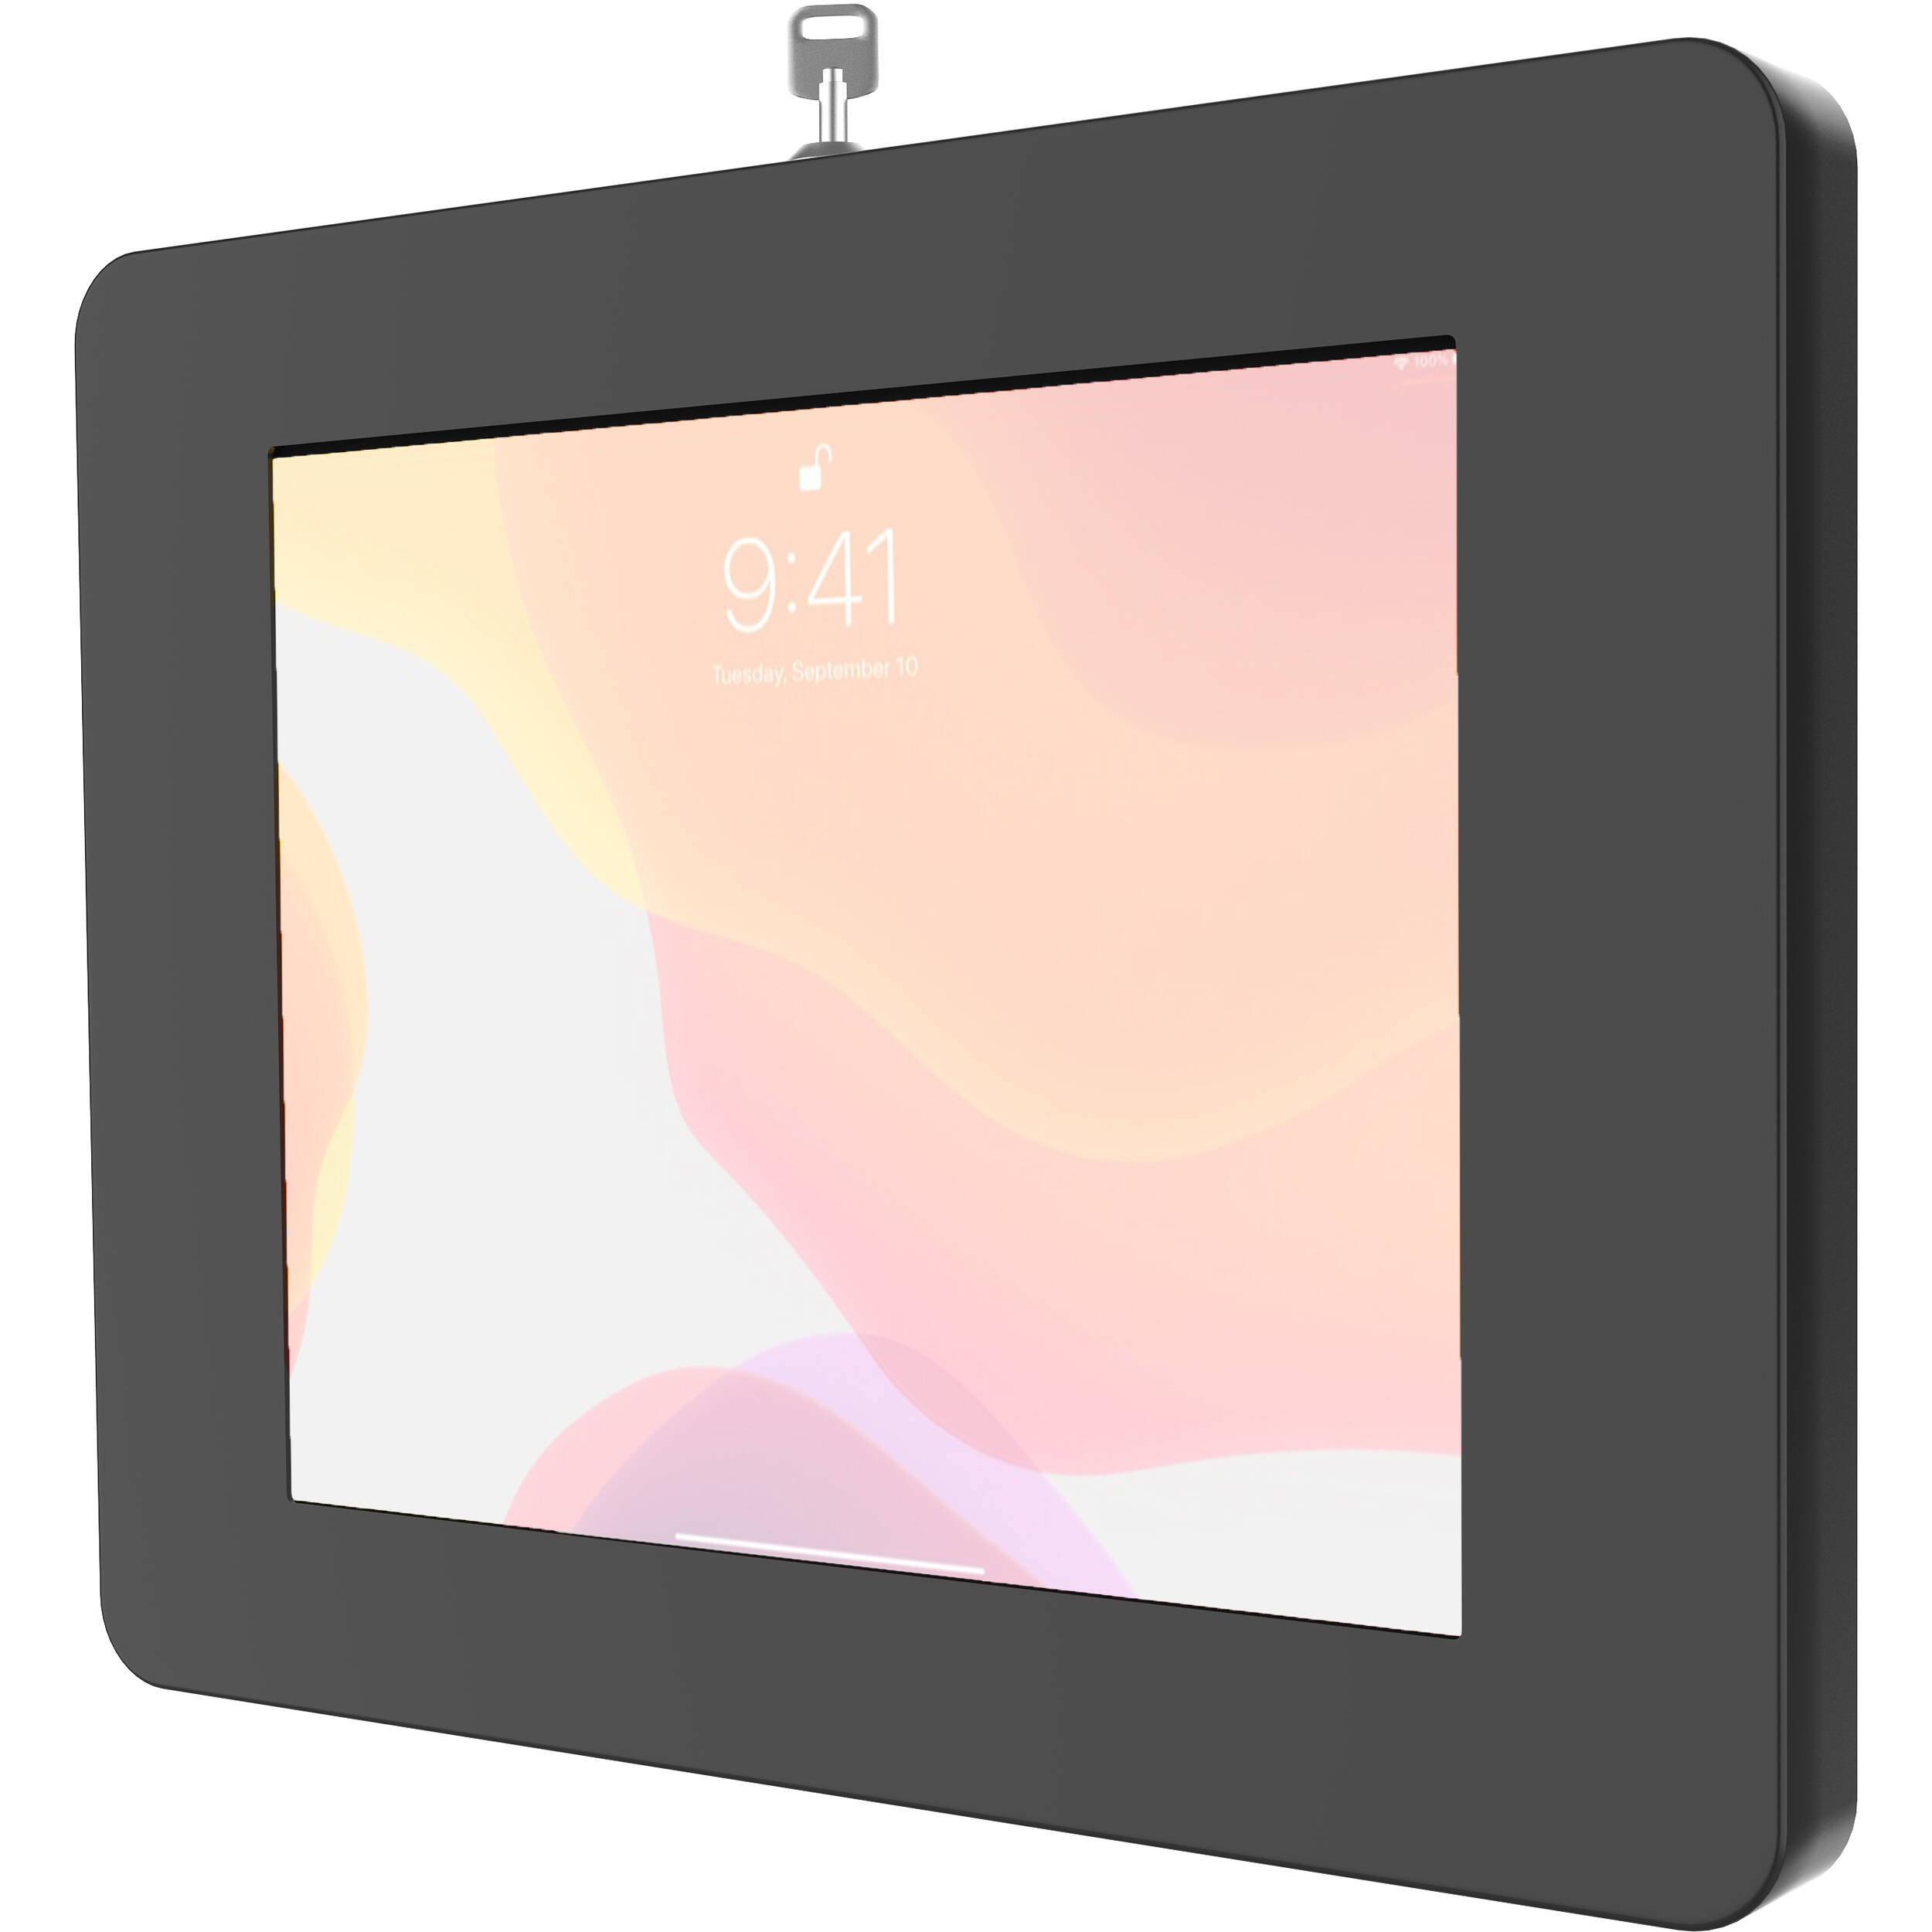 CTA Digital Locking Tablet Wall Mount (Black)